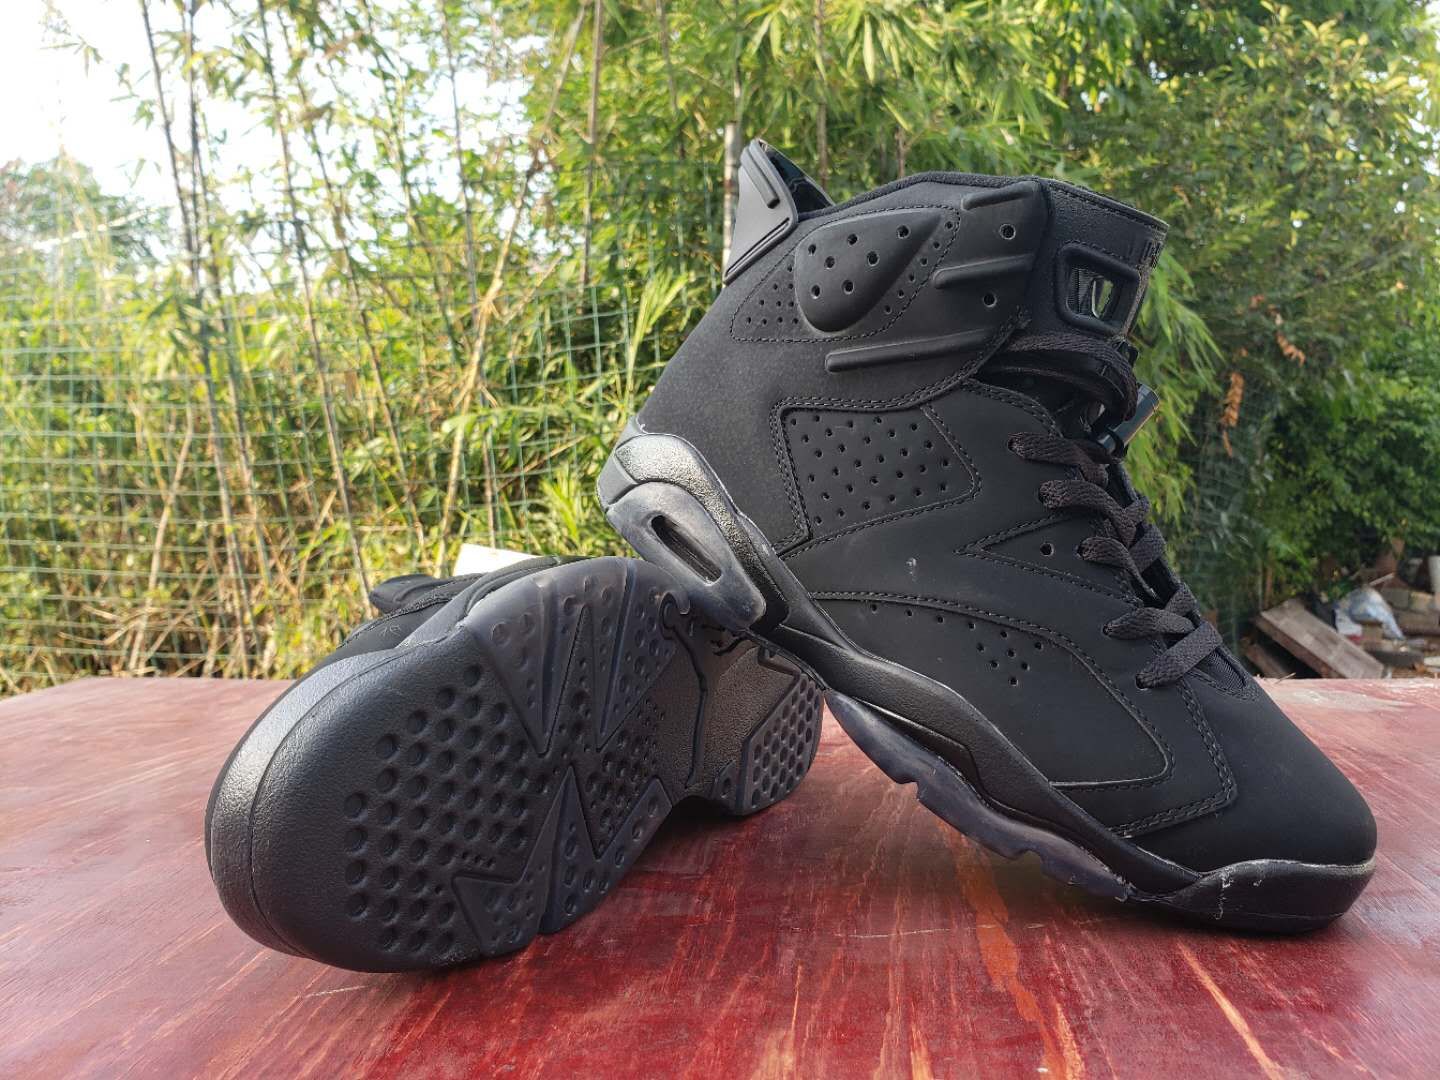 New Air Jordan 6 Retro All Black